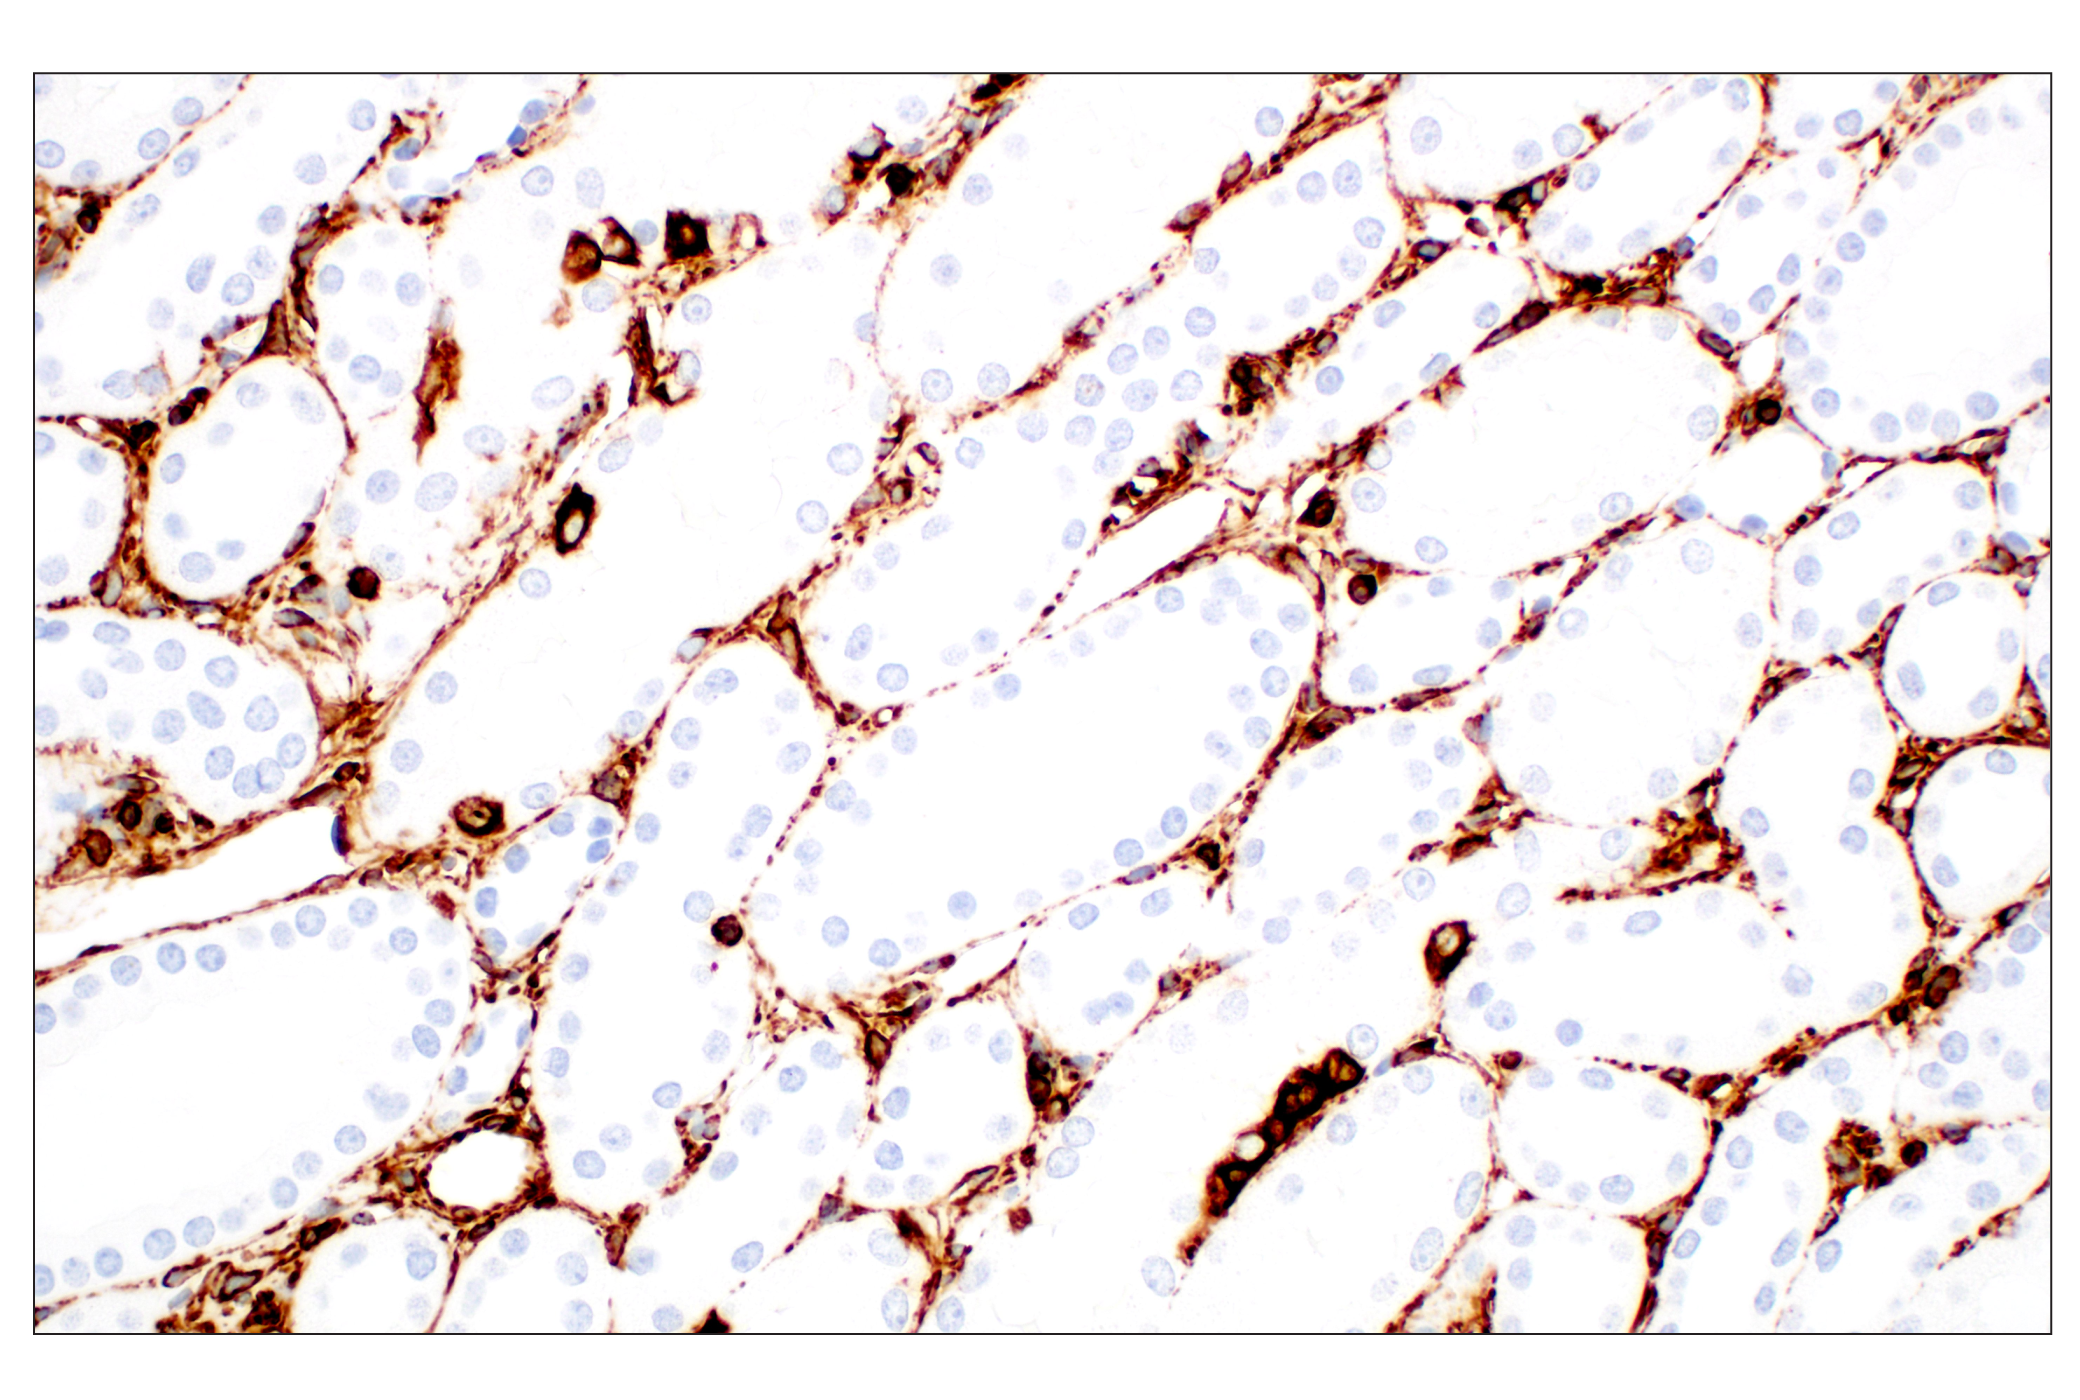  Image 62: Epithelial-Mesenchymal Transition (EMT) Antibody Sampler Kit